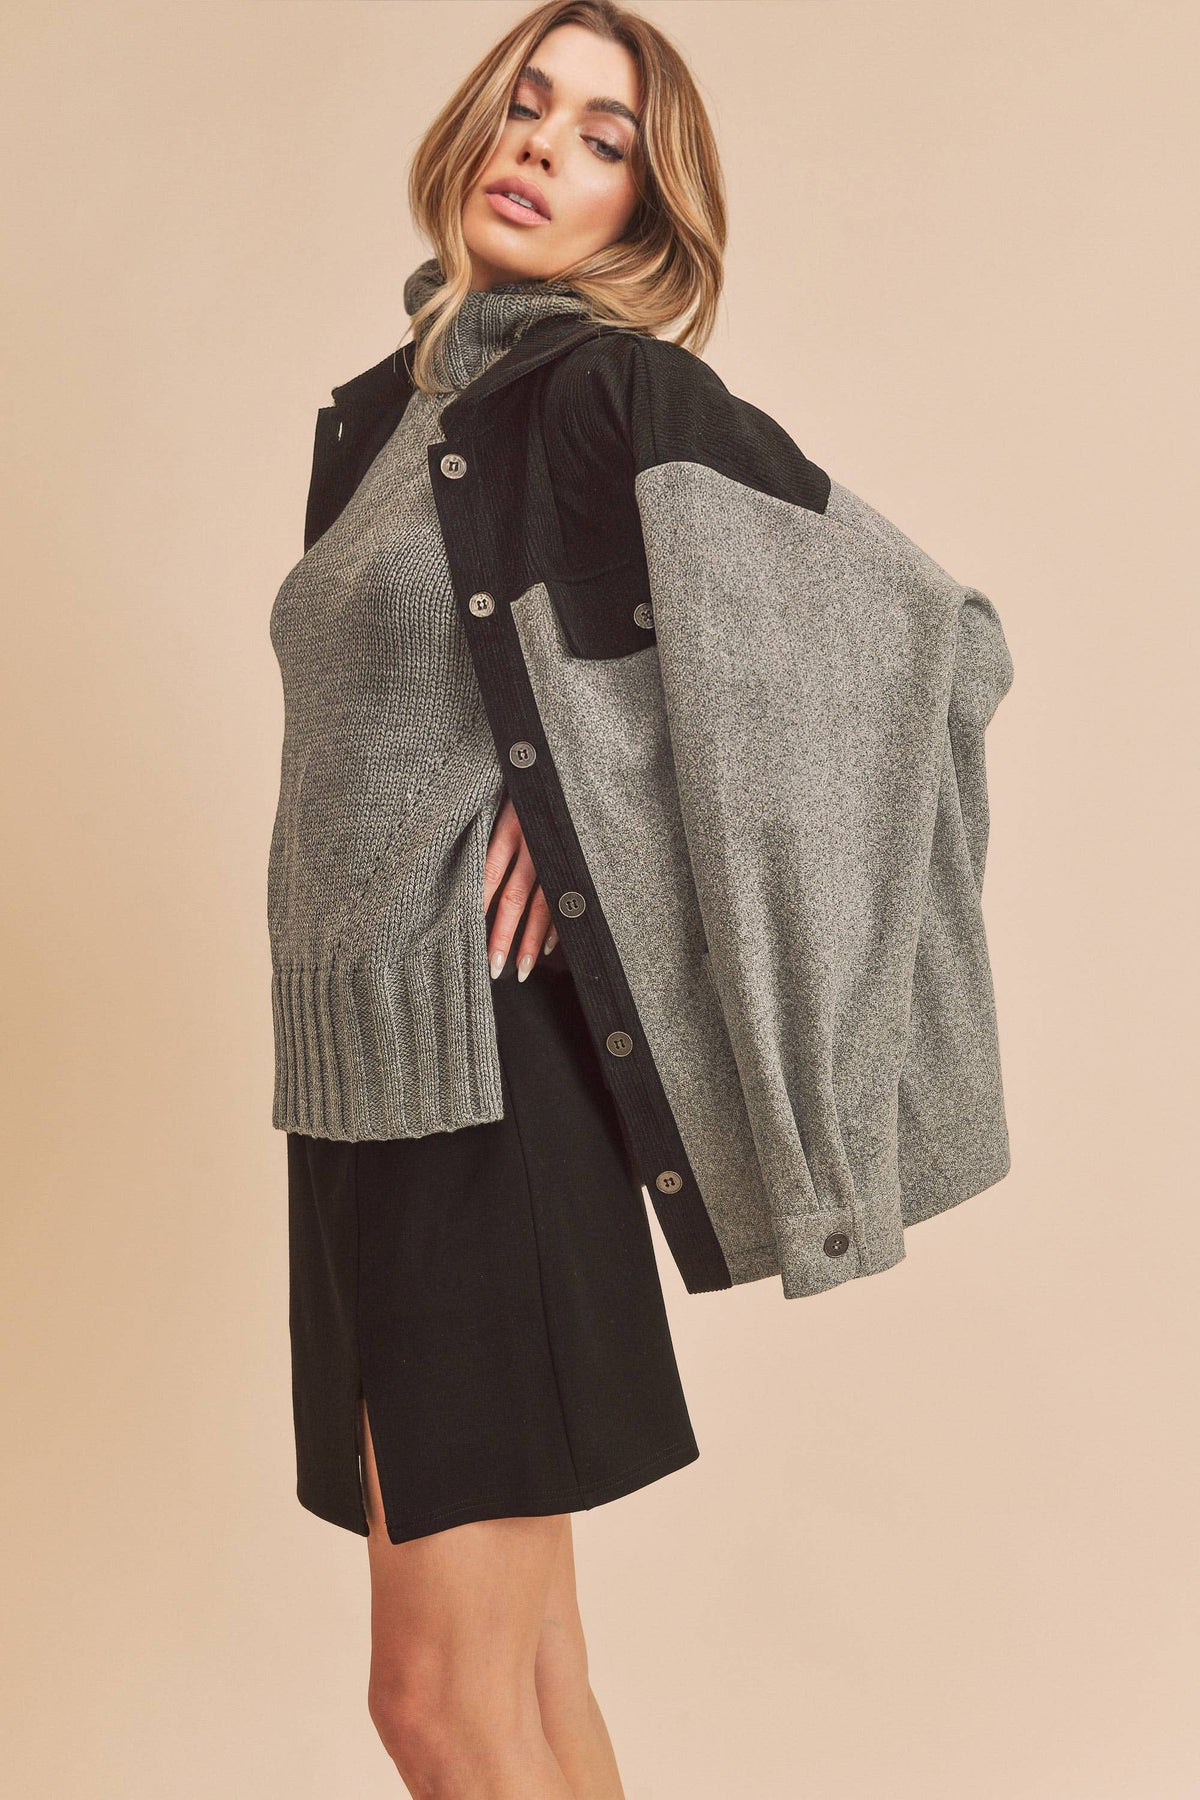 565BK Emilia Jacket: L / Outerwear / Charcoal/Black